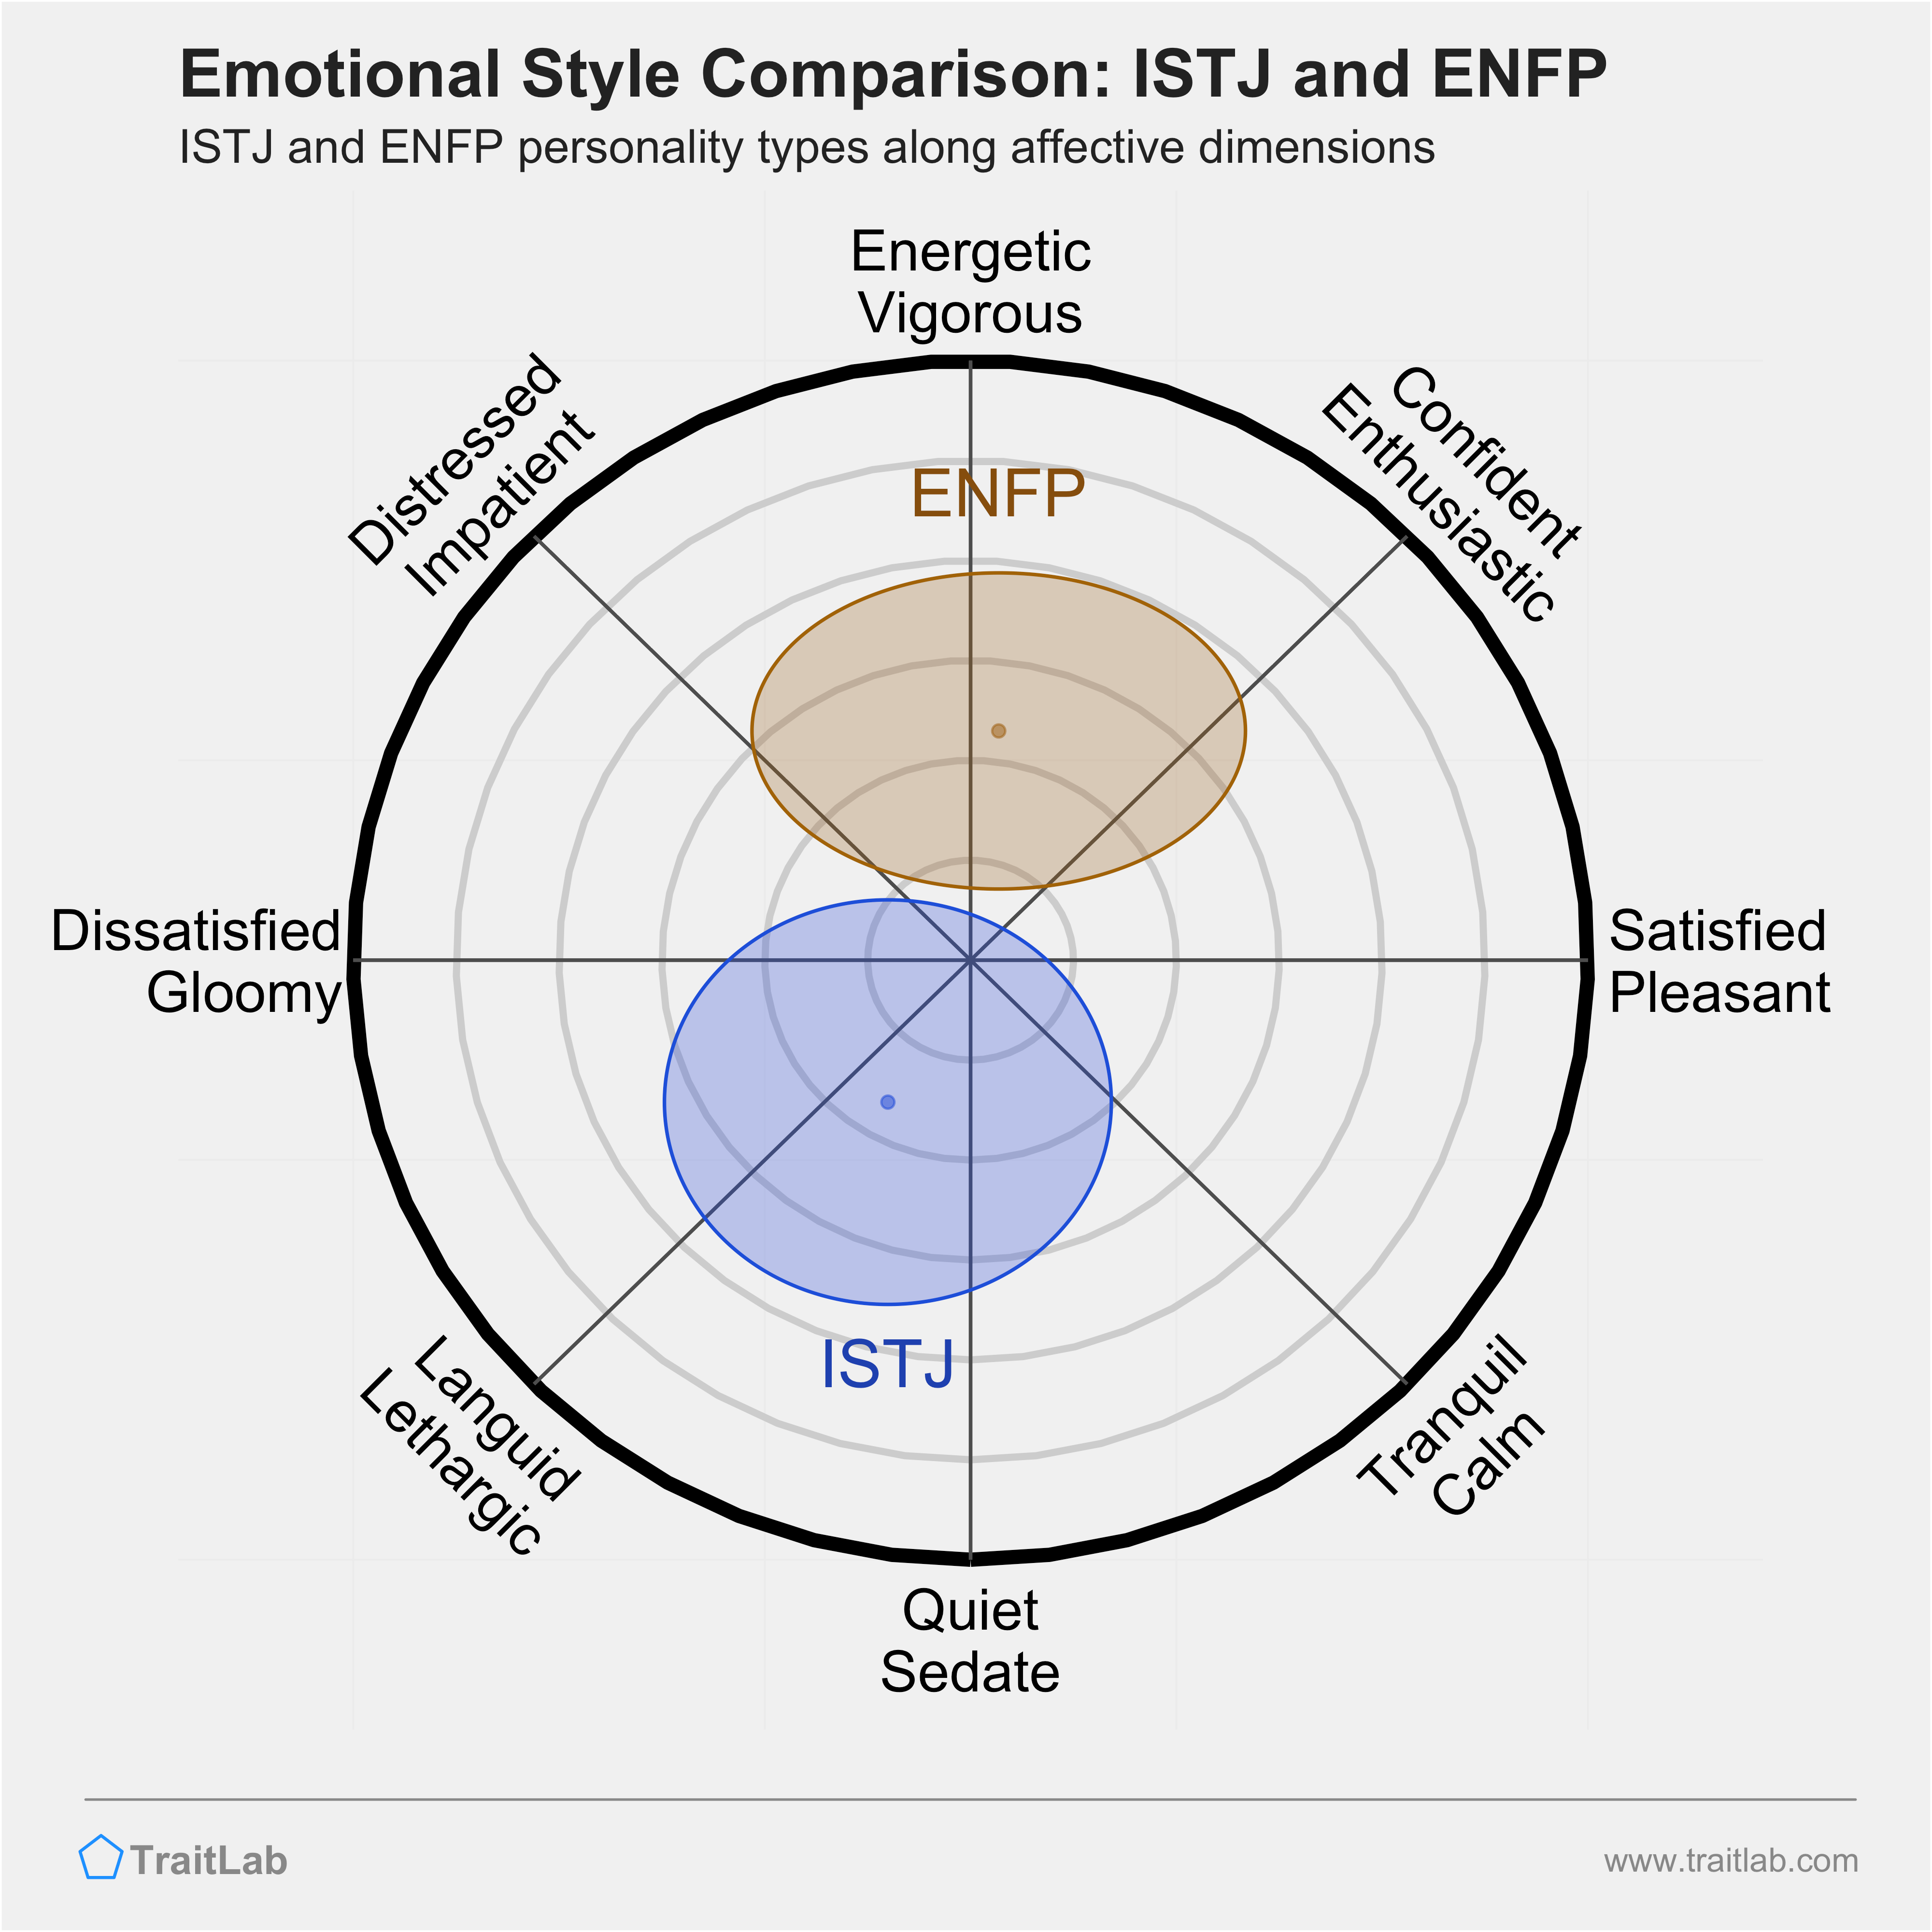 ISTJ and ENFP comparison across emotional (affective) dimensions